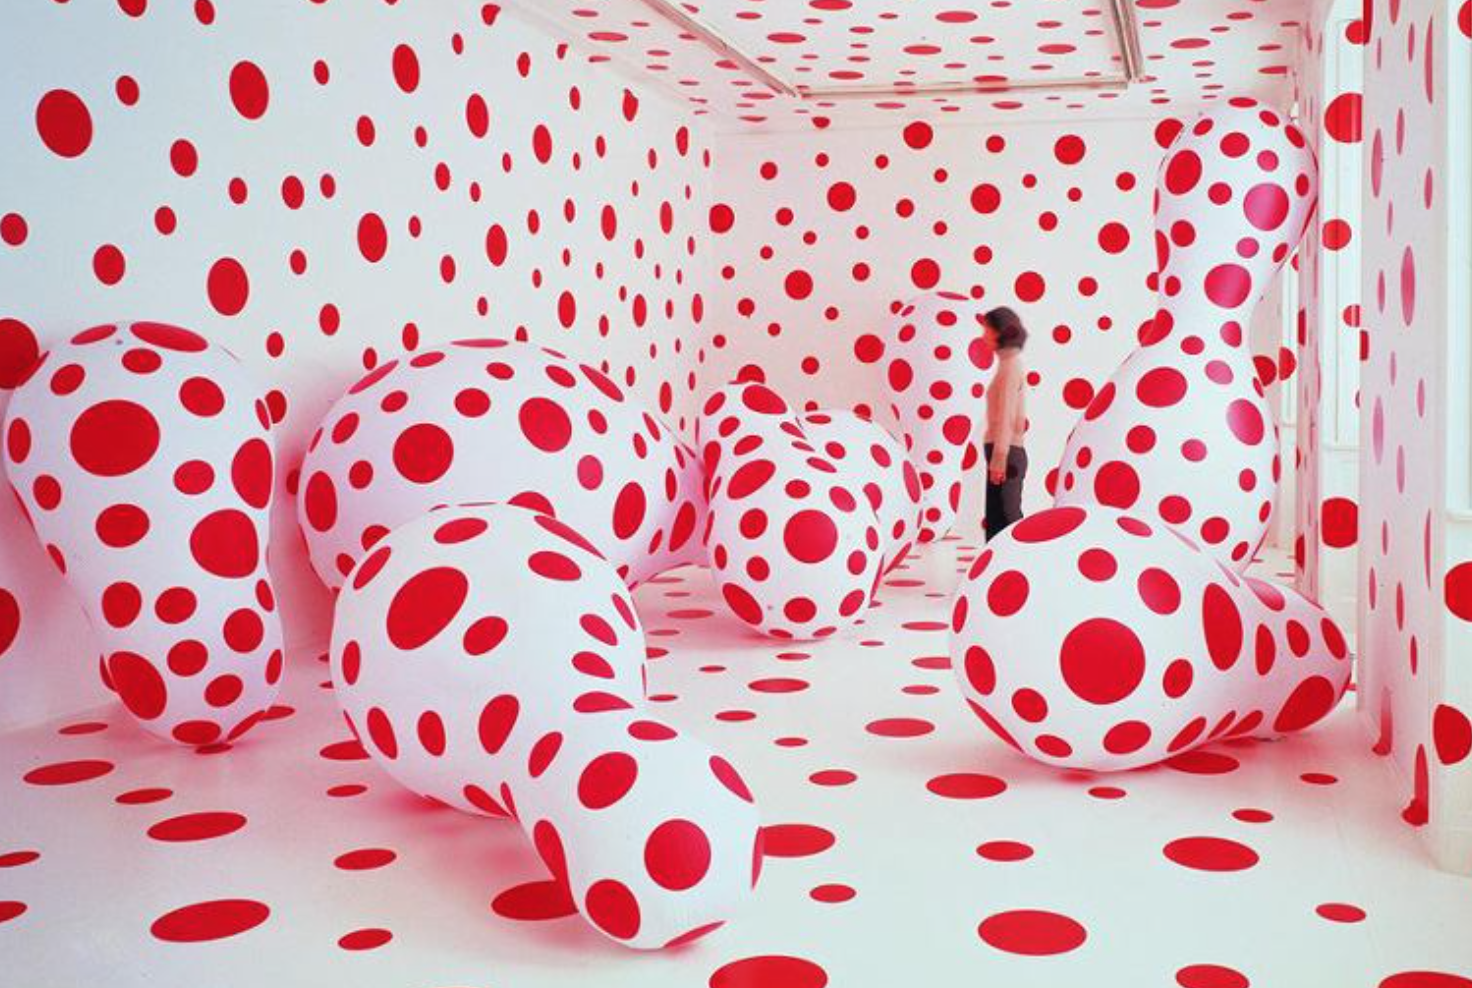 Dot Composition  Polka dot art, Abstract canvas art, Dots art